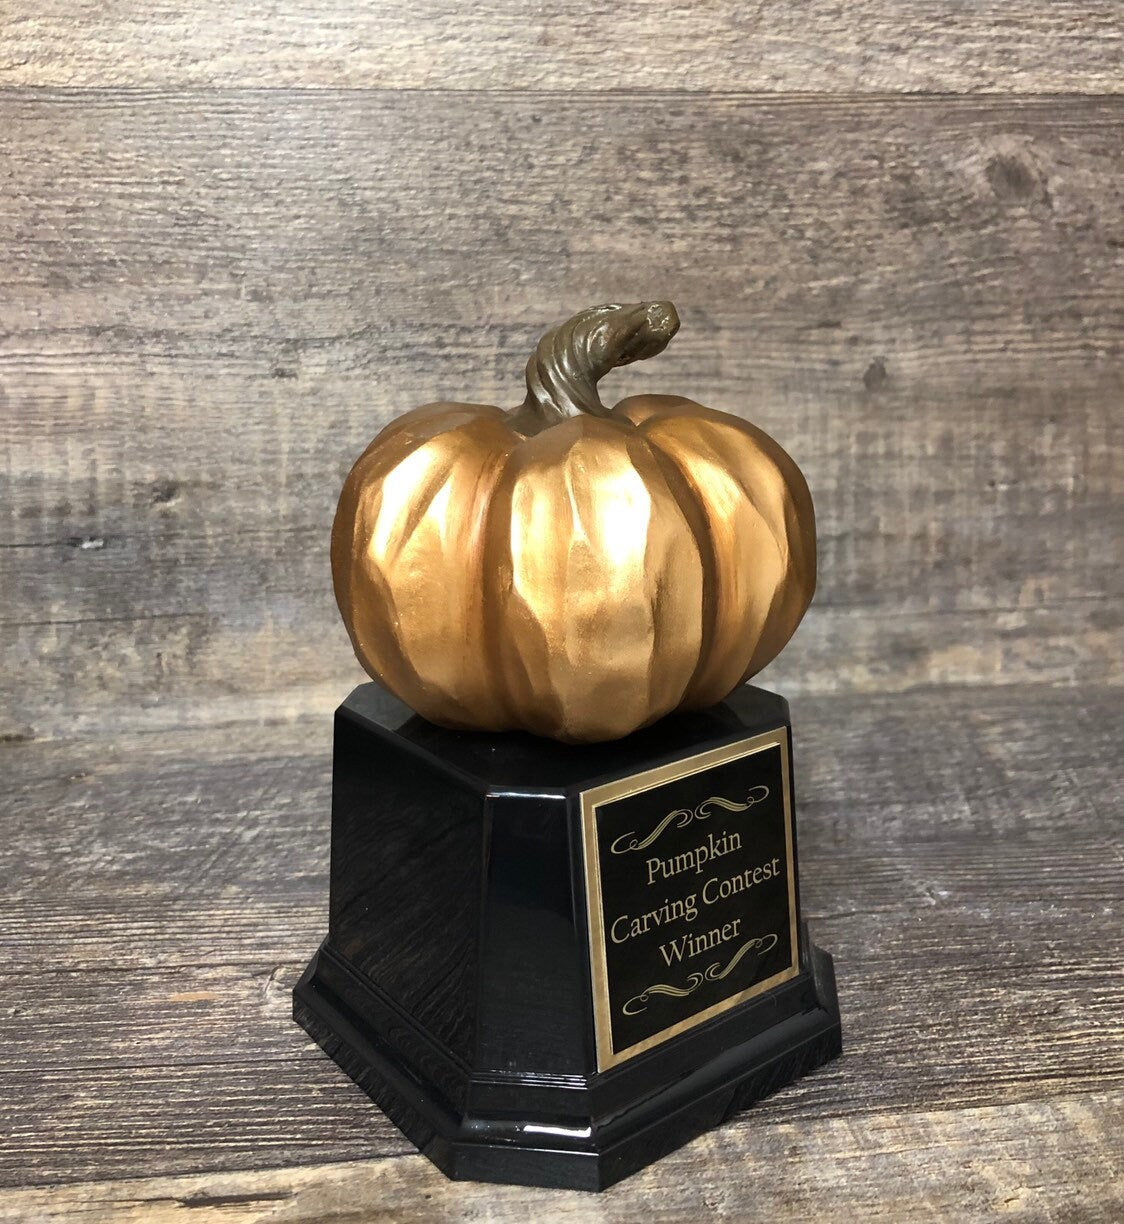 Halloween Trophy Gold Pumpkin Carving Contest Jack O Lantern Trophy or Best Costume Contest Prize Pumpkin Halloween Decor Halloween Trophies